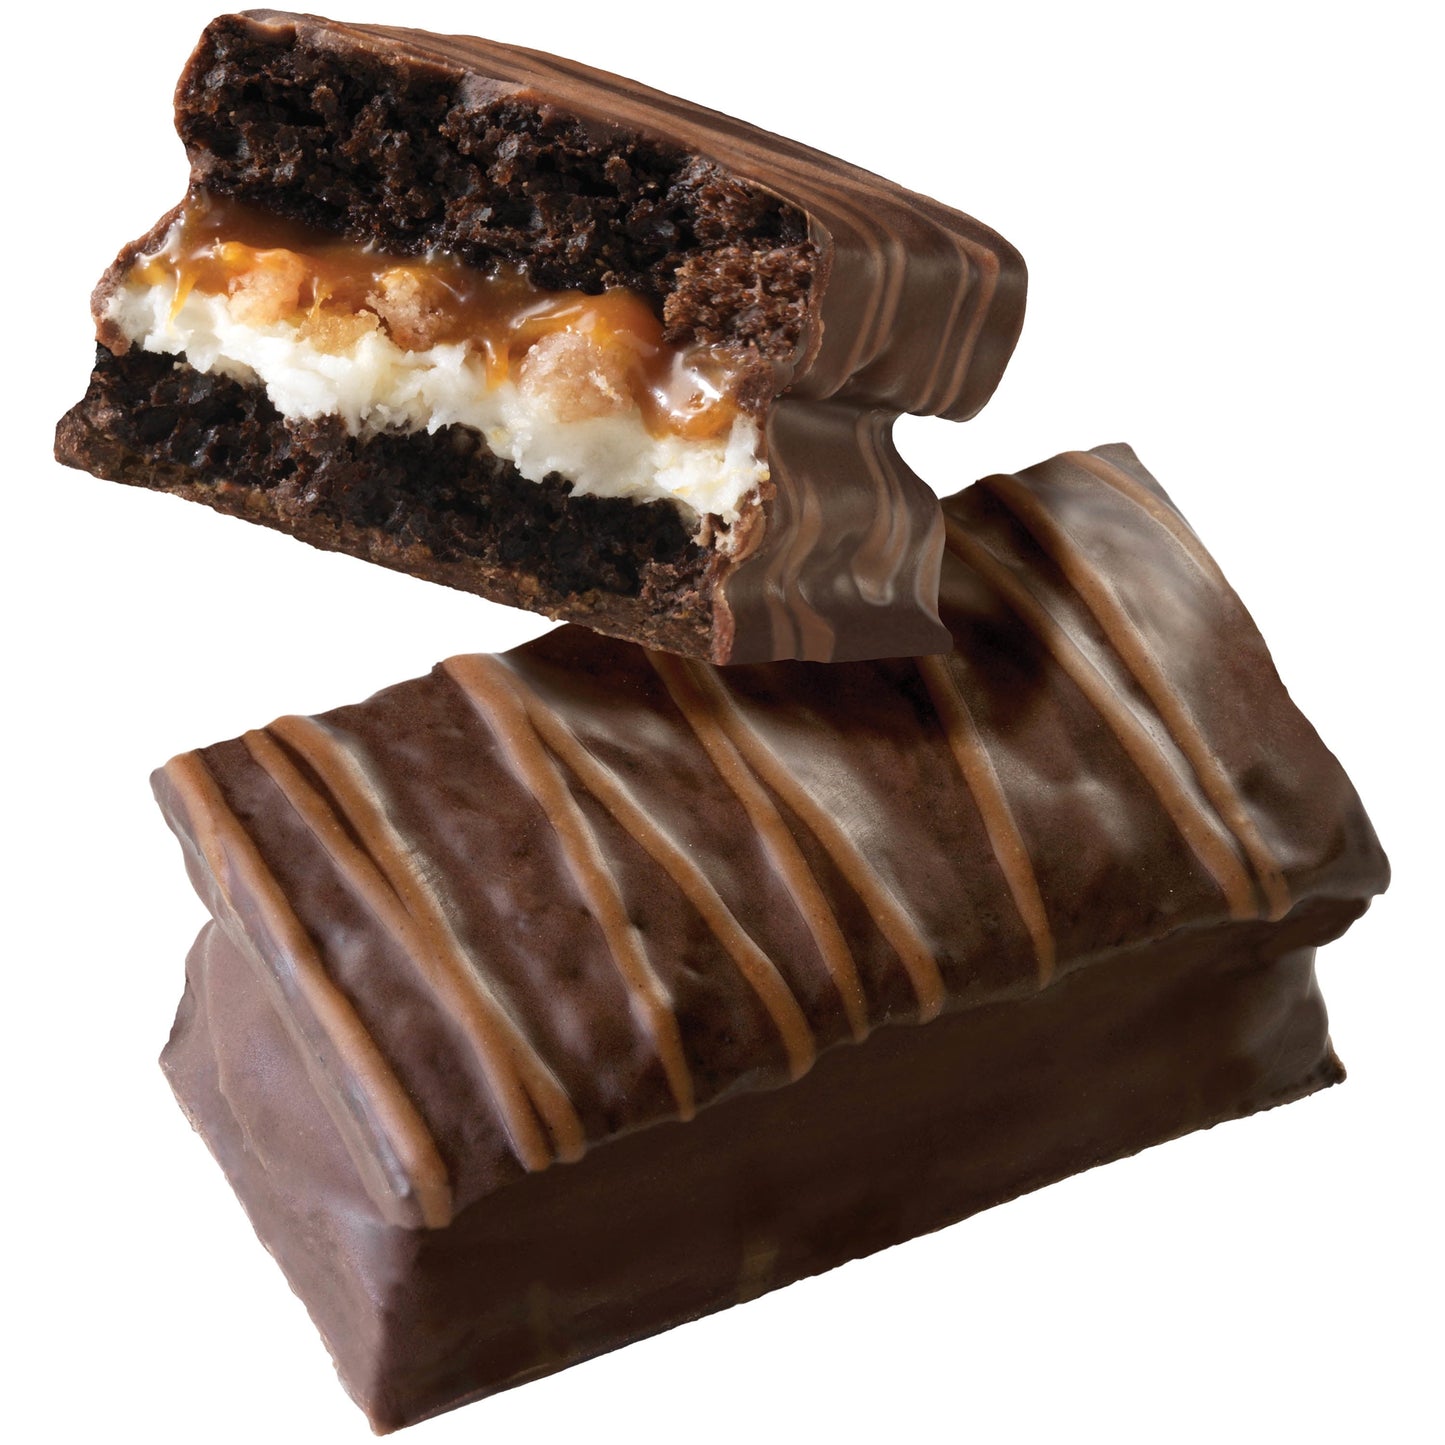 Hostess Chocolate Caramel Kazbars Creamy & Crunchy Layer Bar, Individually Wrapped, 8 Count 10 oz